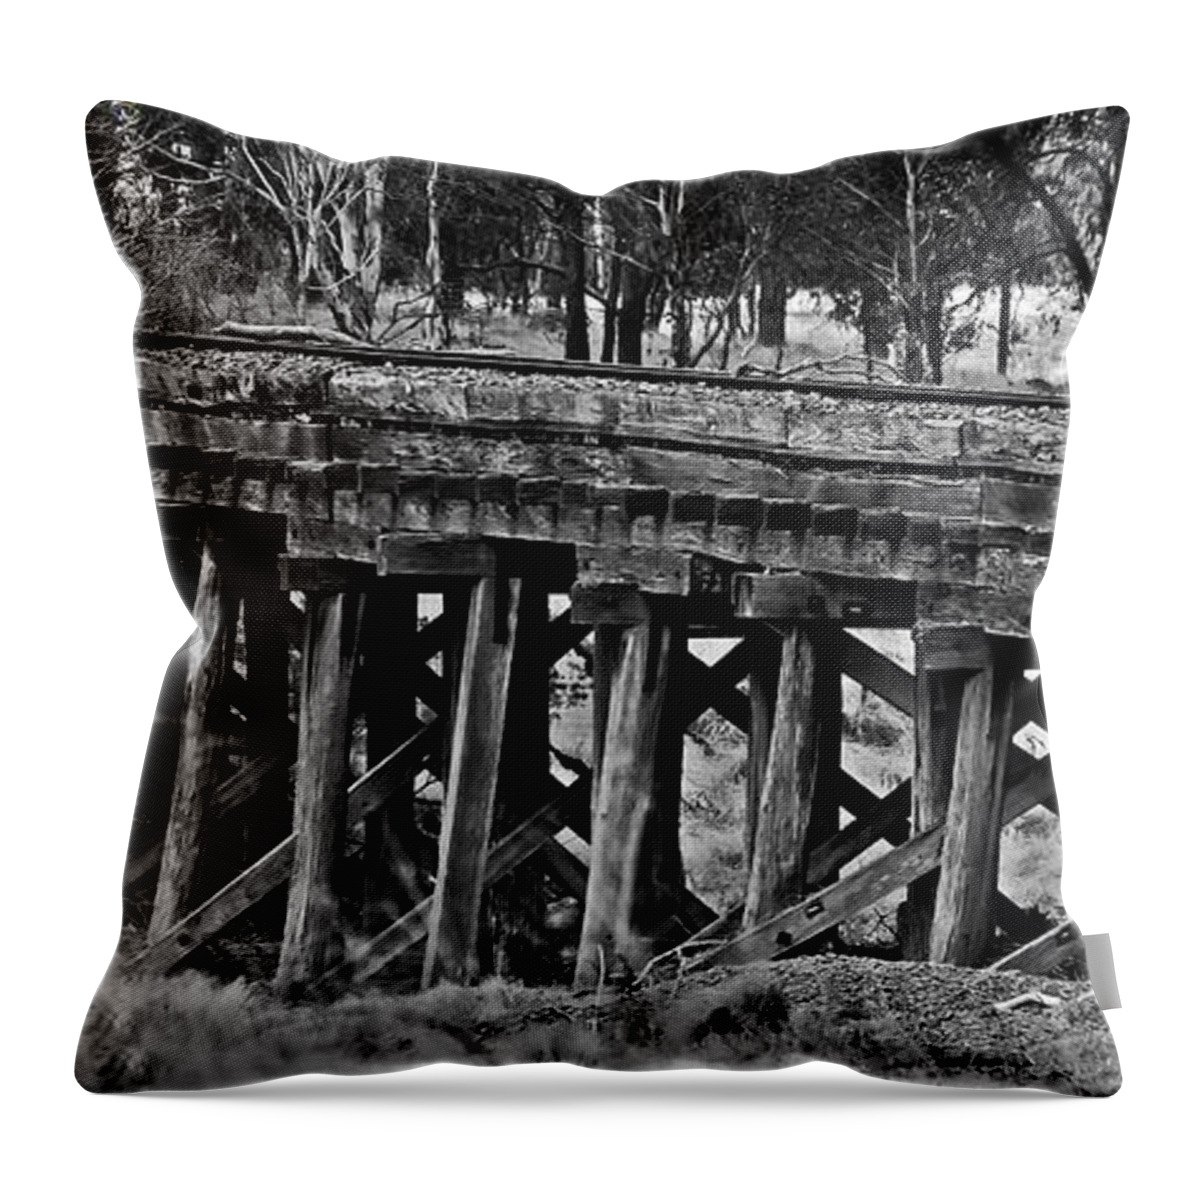 Blair Stuart Throw Pillow featuring the photograph Colonial Era Bridge. by Blair Stuart